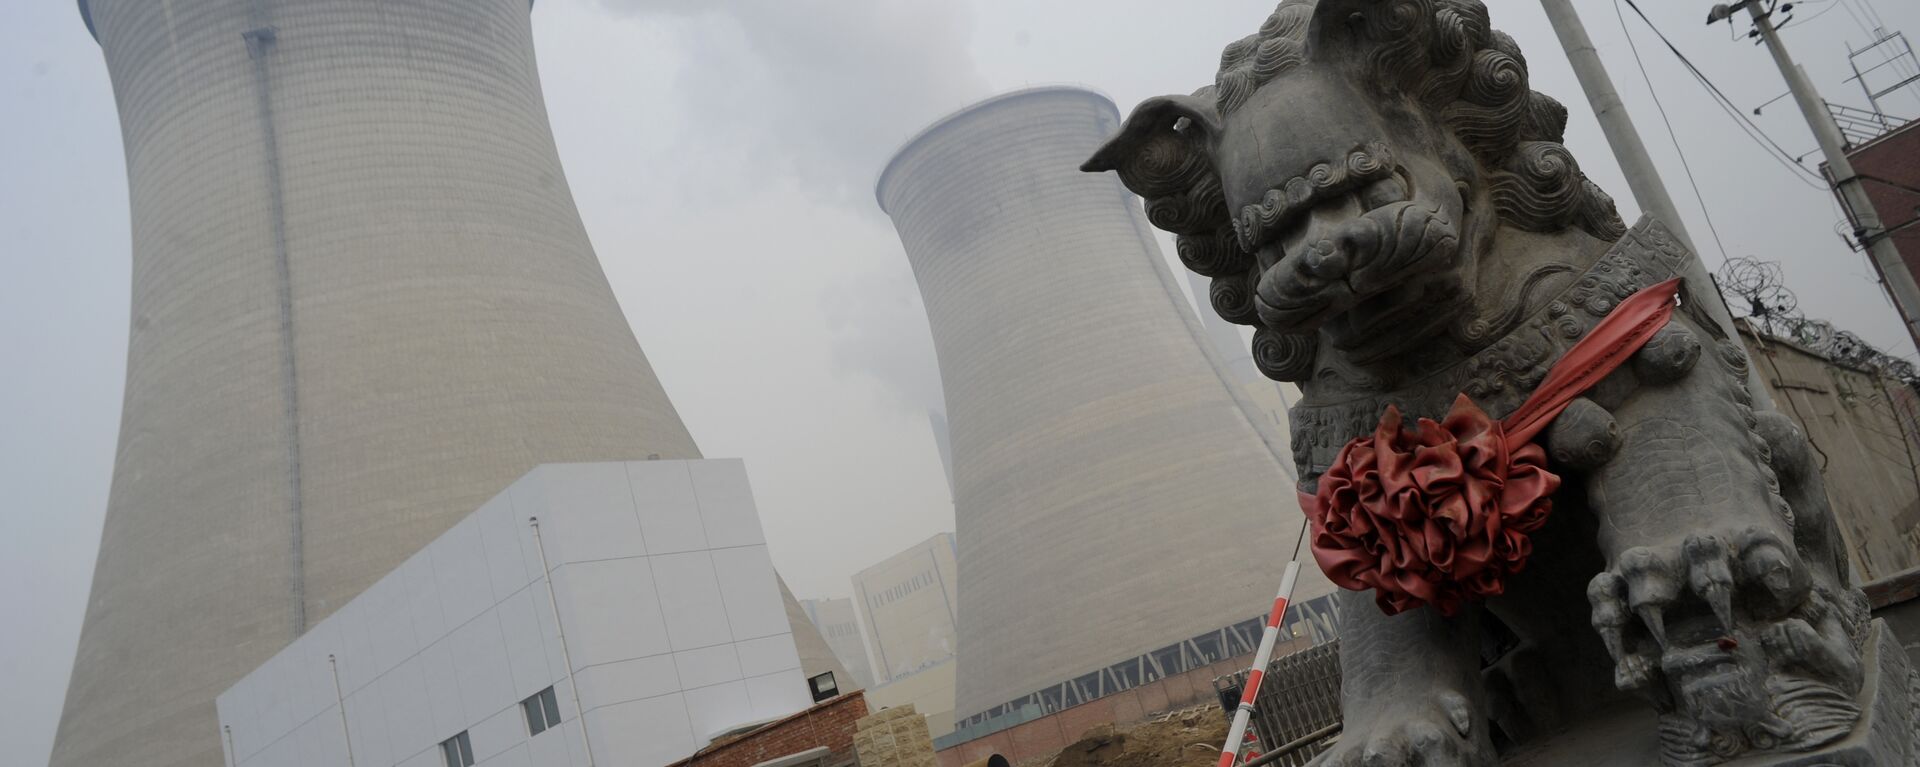 Beijing coal power plant - 永利官网卫星通讯社, 1920, 13.10.2021